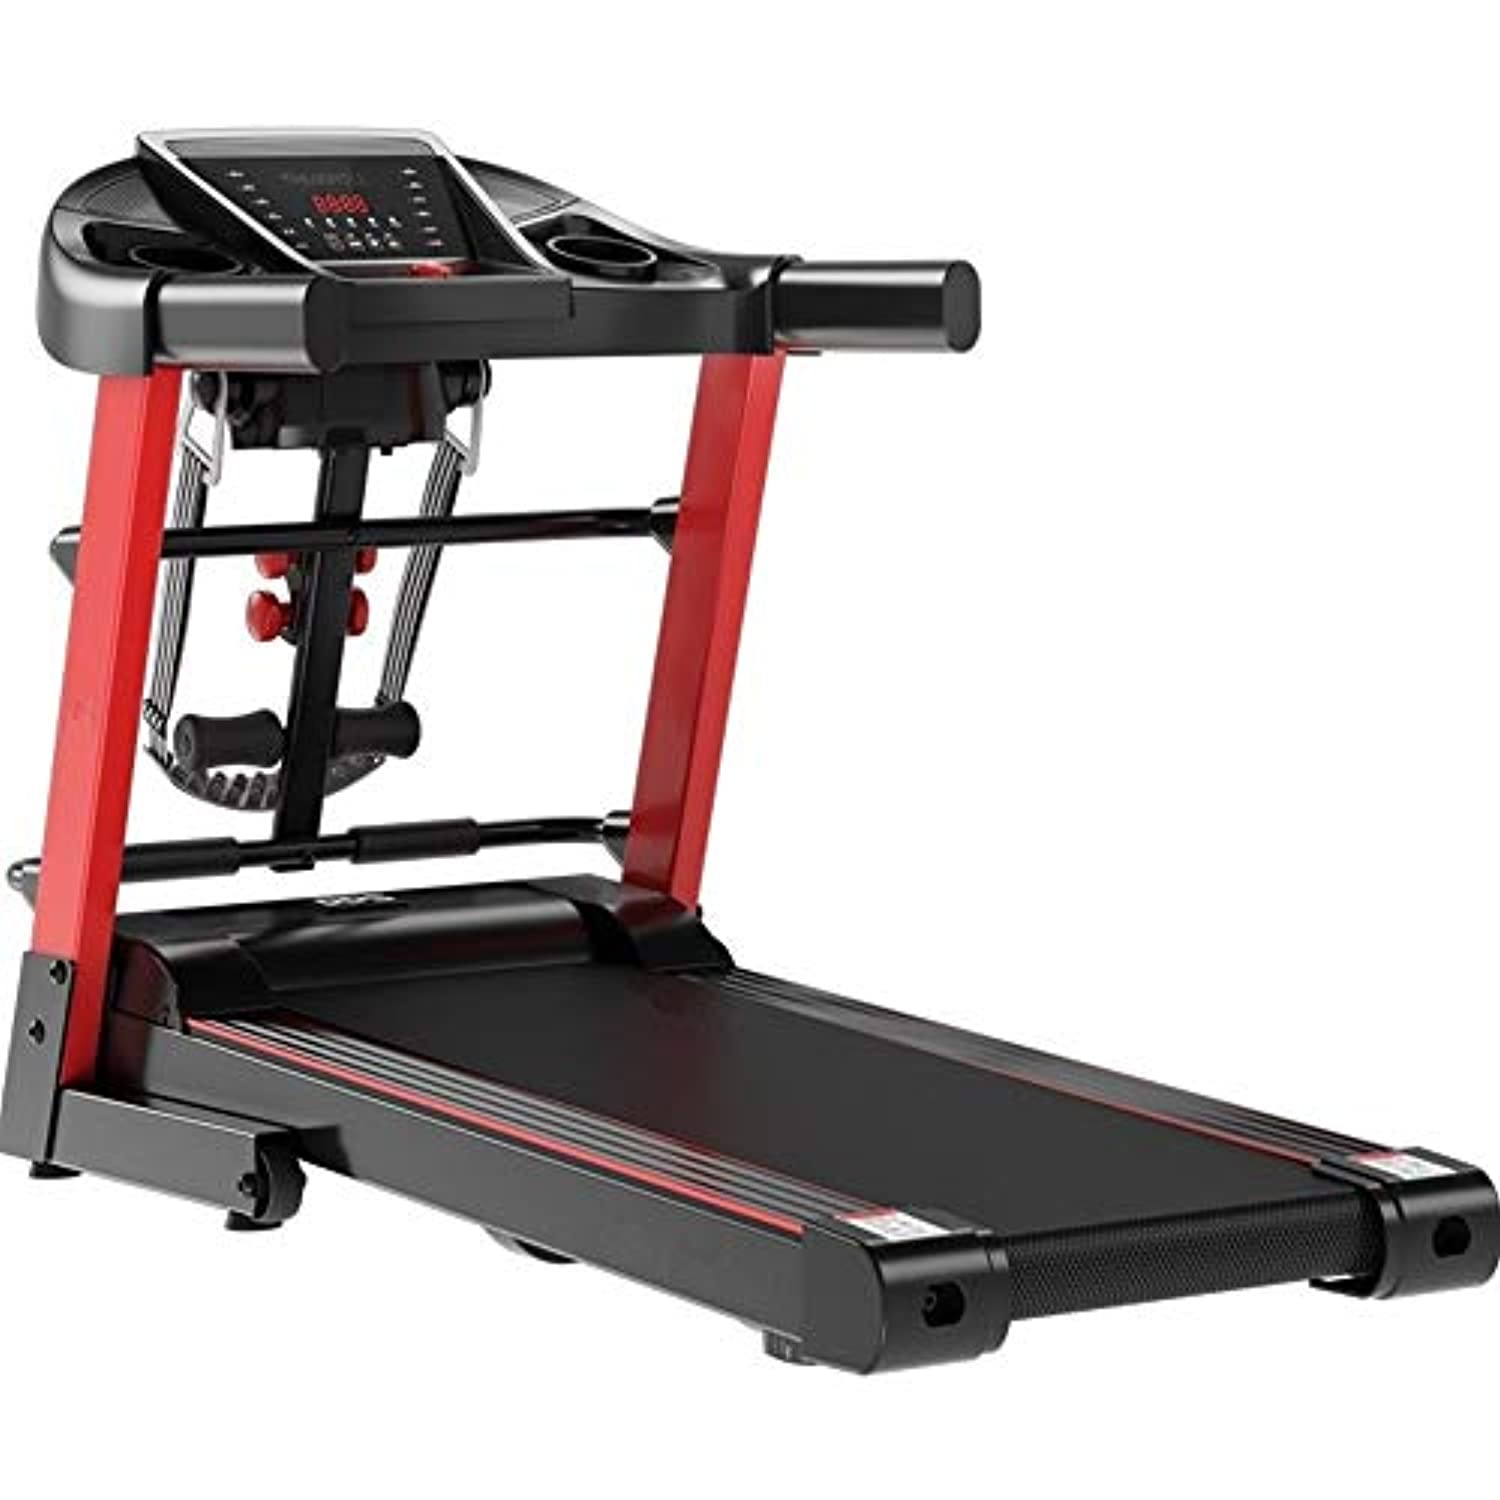 Zzfni Treadmill Foldable Household Treadmill, Multifunctional High Horsepower Walking Machine, Weight Loss Fitness Equipment Foldable Treadmill